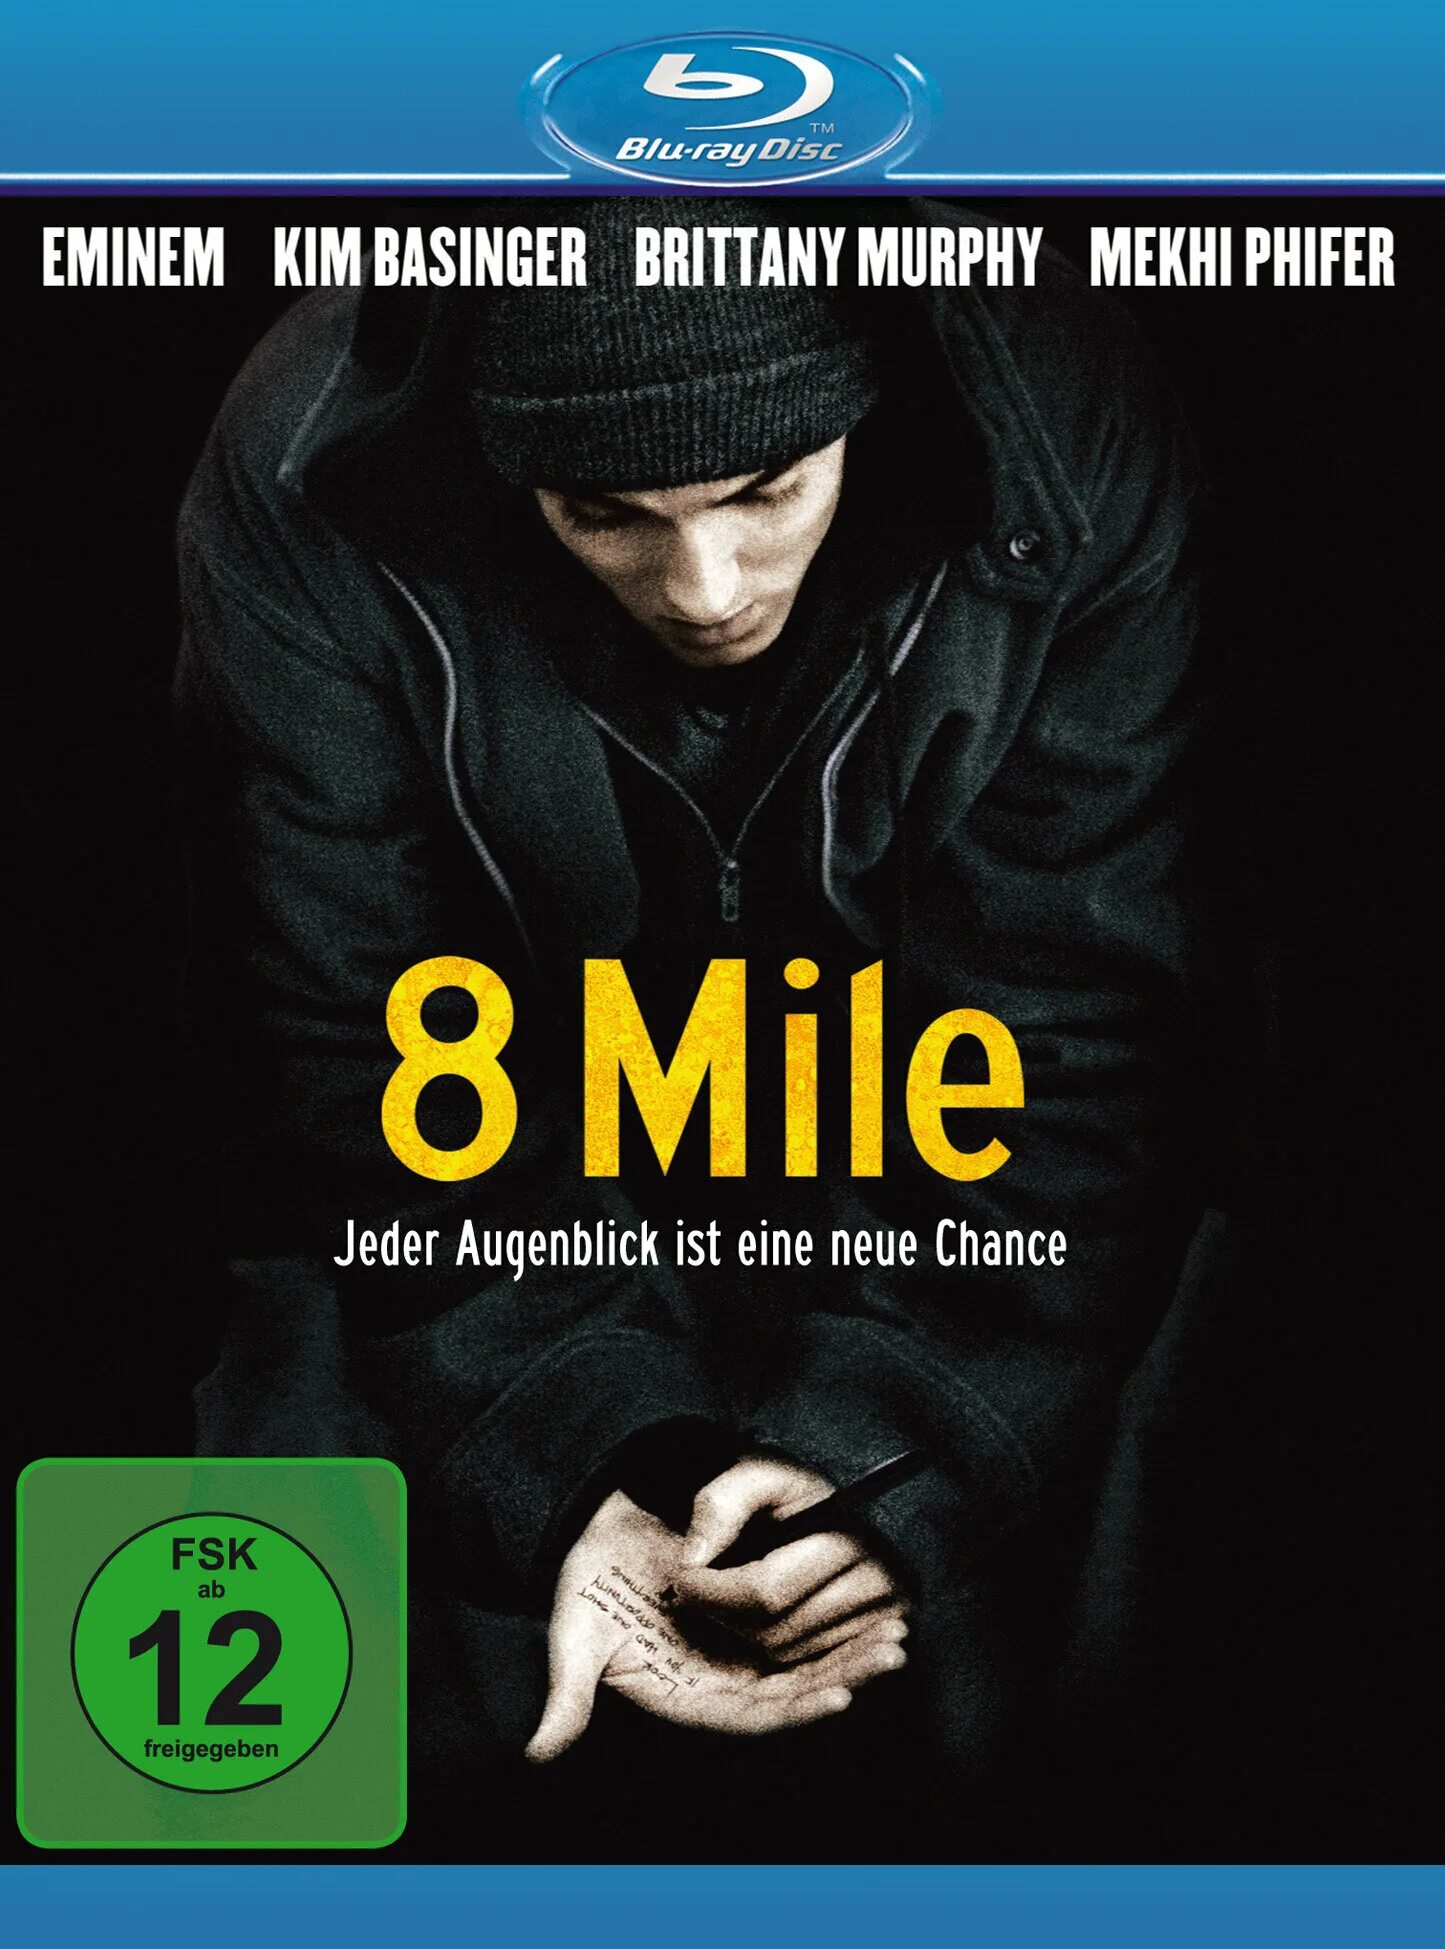 8 миля сайт. 8 Миля обложка. Eminem 8 Mile обложка. 8 Миля афиша.